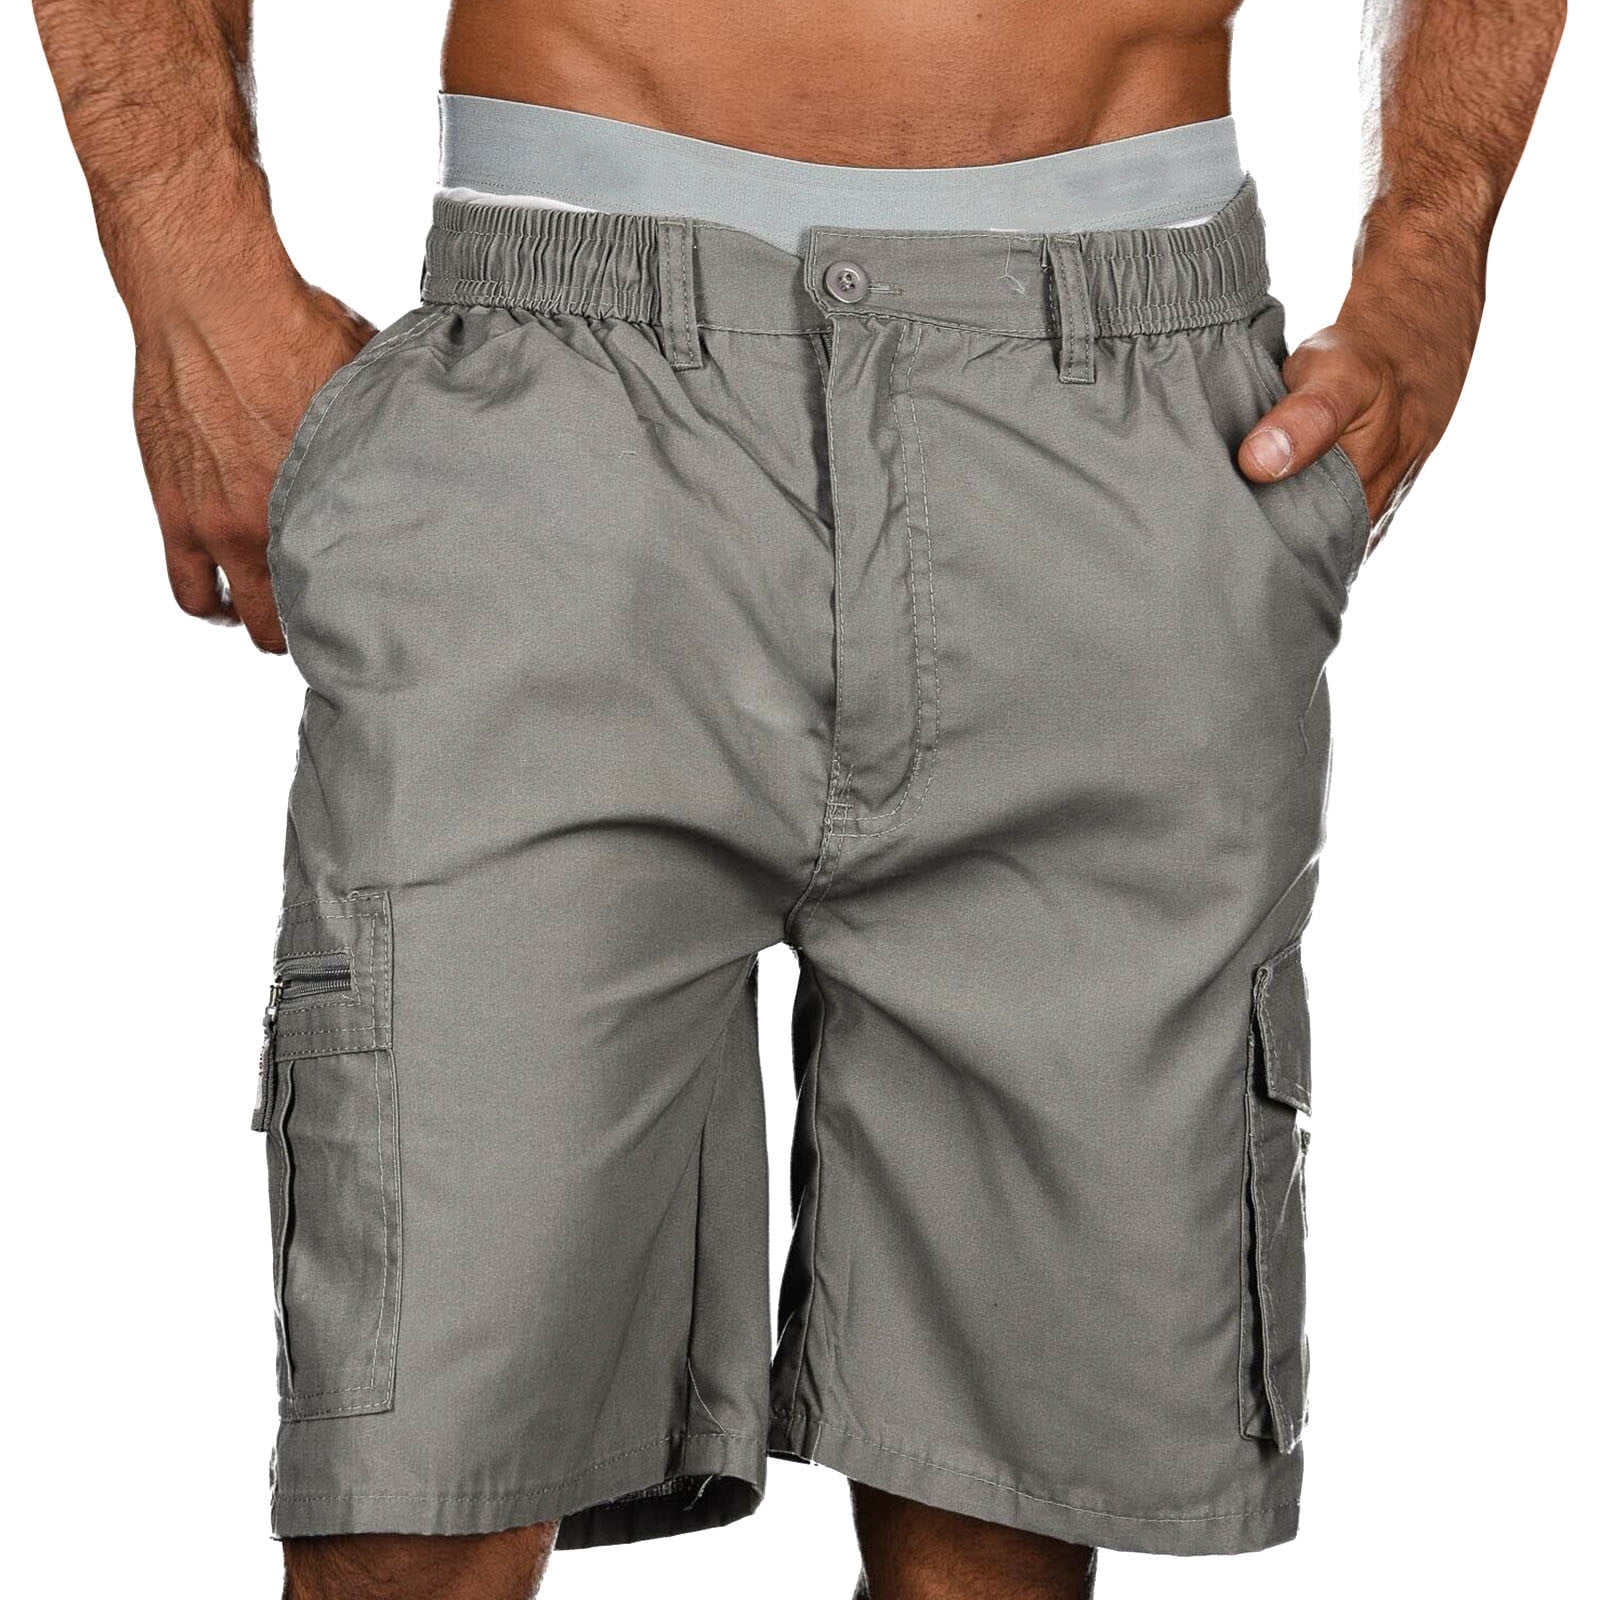 LWZWM Beach Pants for Men Sports Shorts Summer Shorts Low Waist Solid Multi Pocket Office Pants Shorts Combat Pants Baseball Pants Yoga Shorts Workout Pants Gray XXXL - Walmart.com